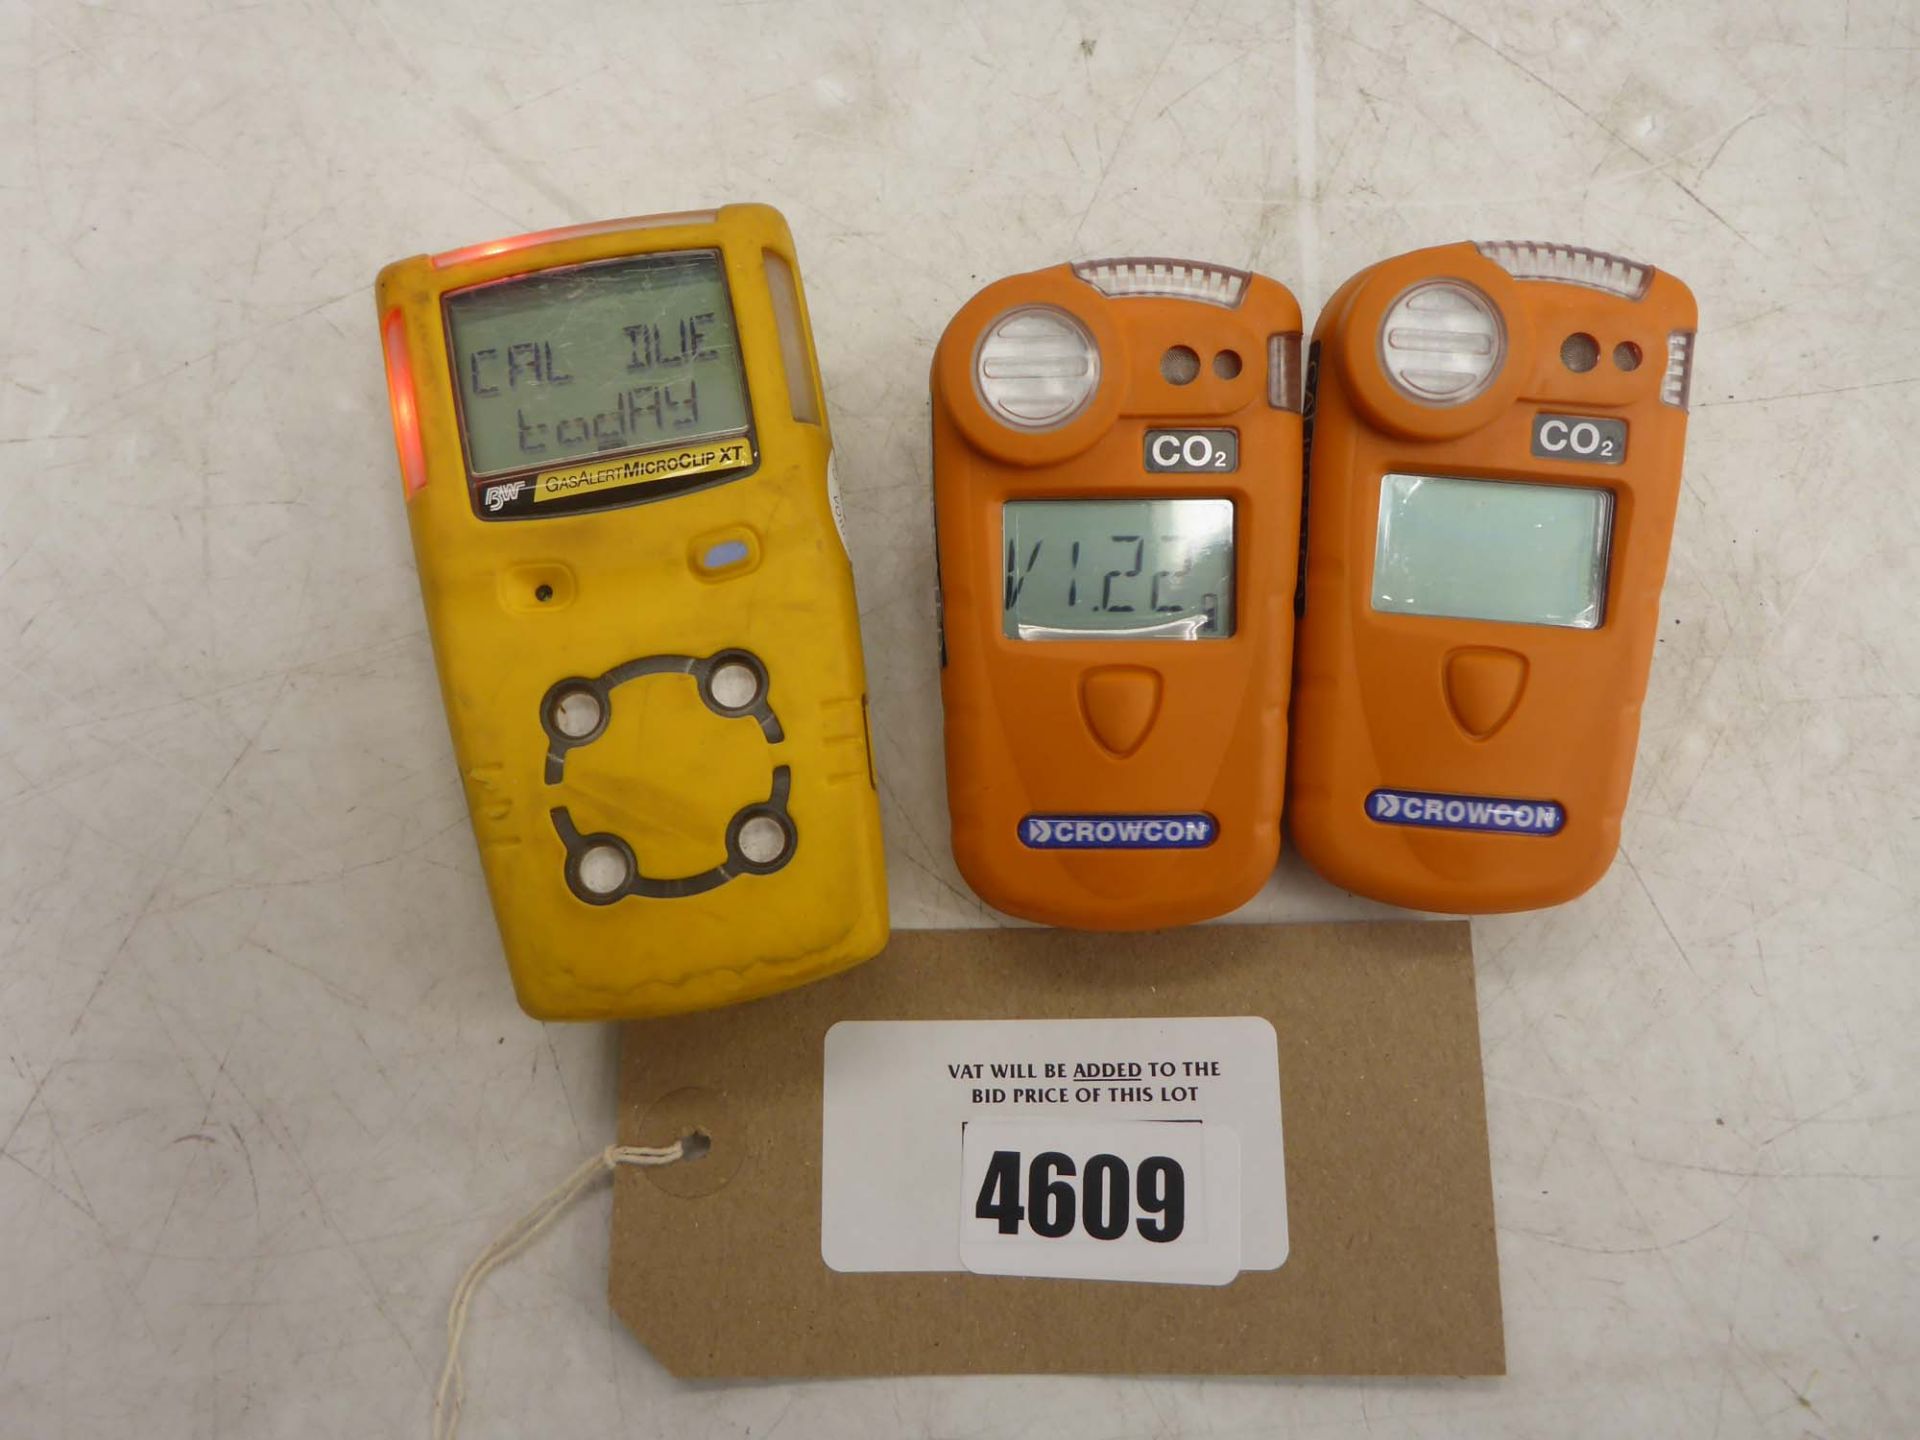 BW Gas Alert Micro Clip XT detector and 2 Crowcon Gasman personal gas detectors